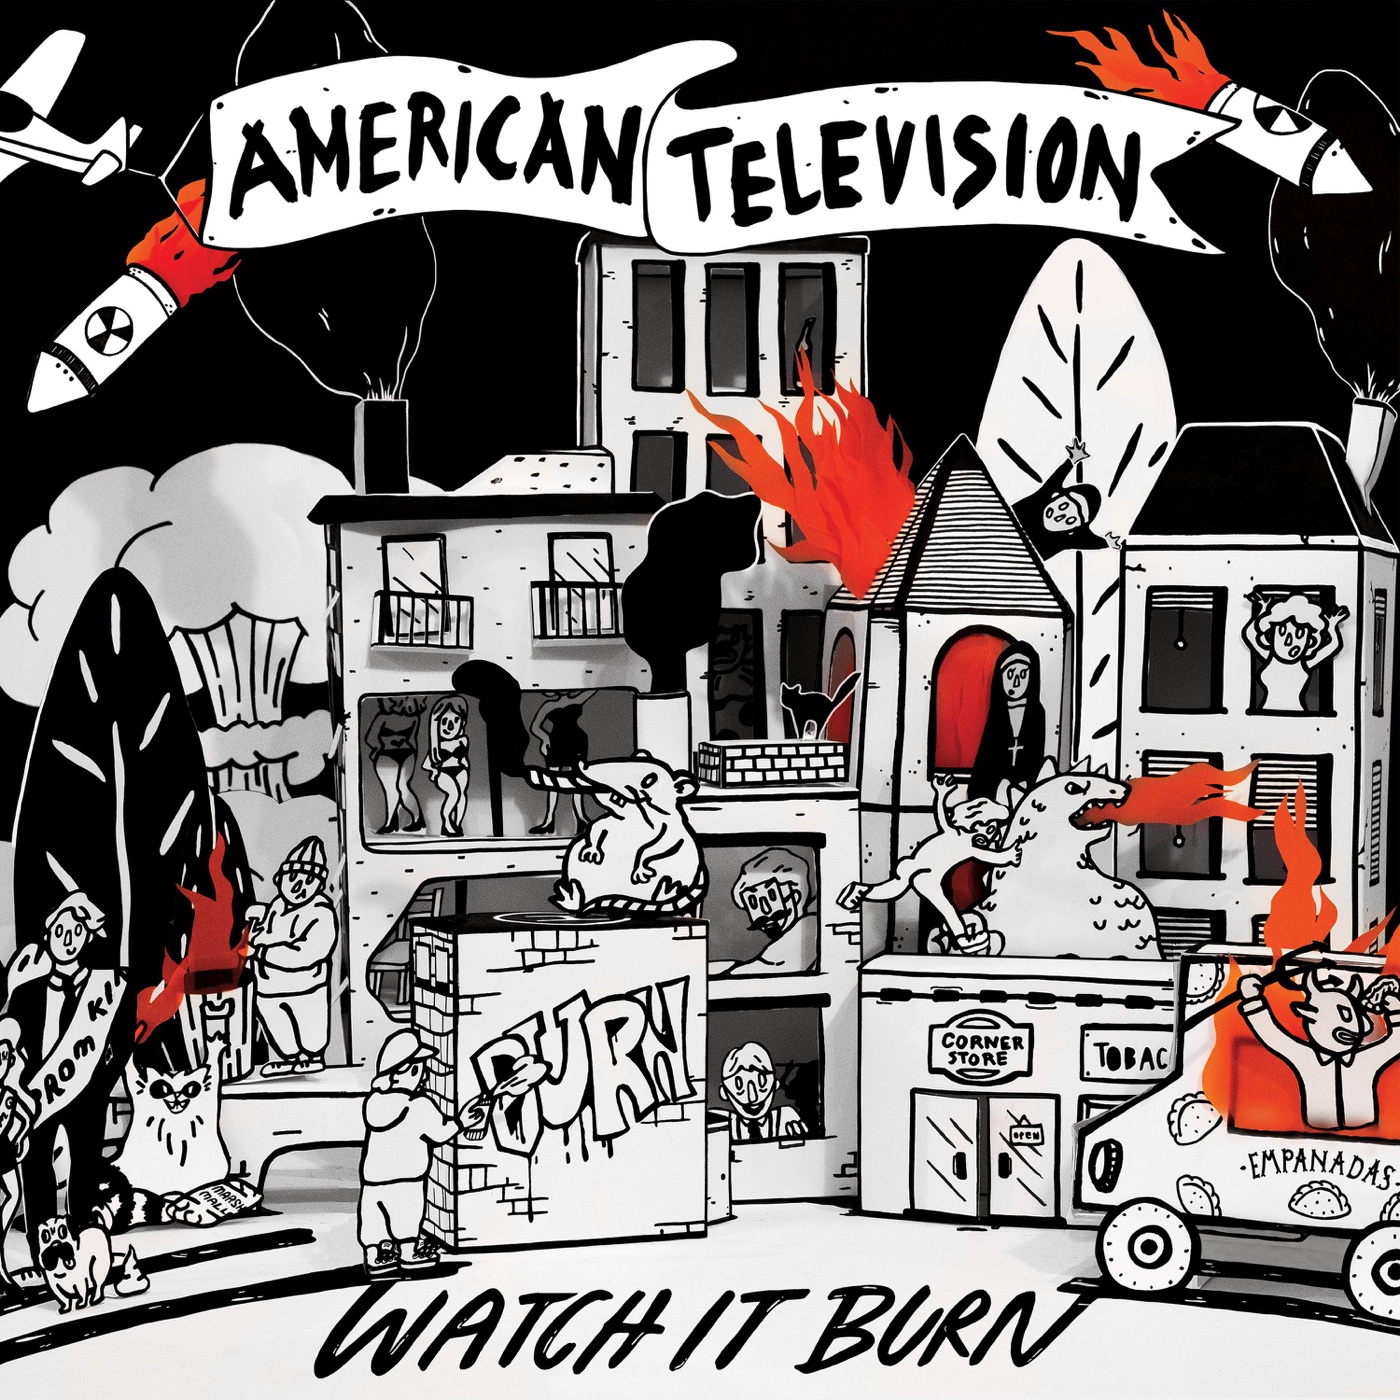 American Television - Watch It Burn (2020)